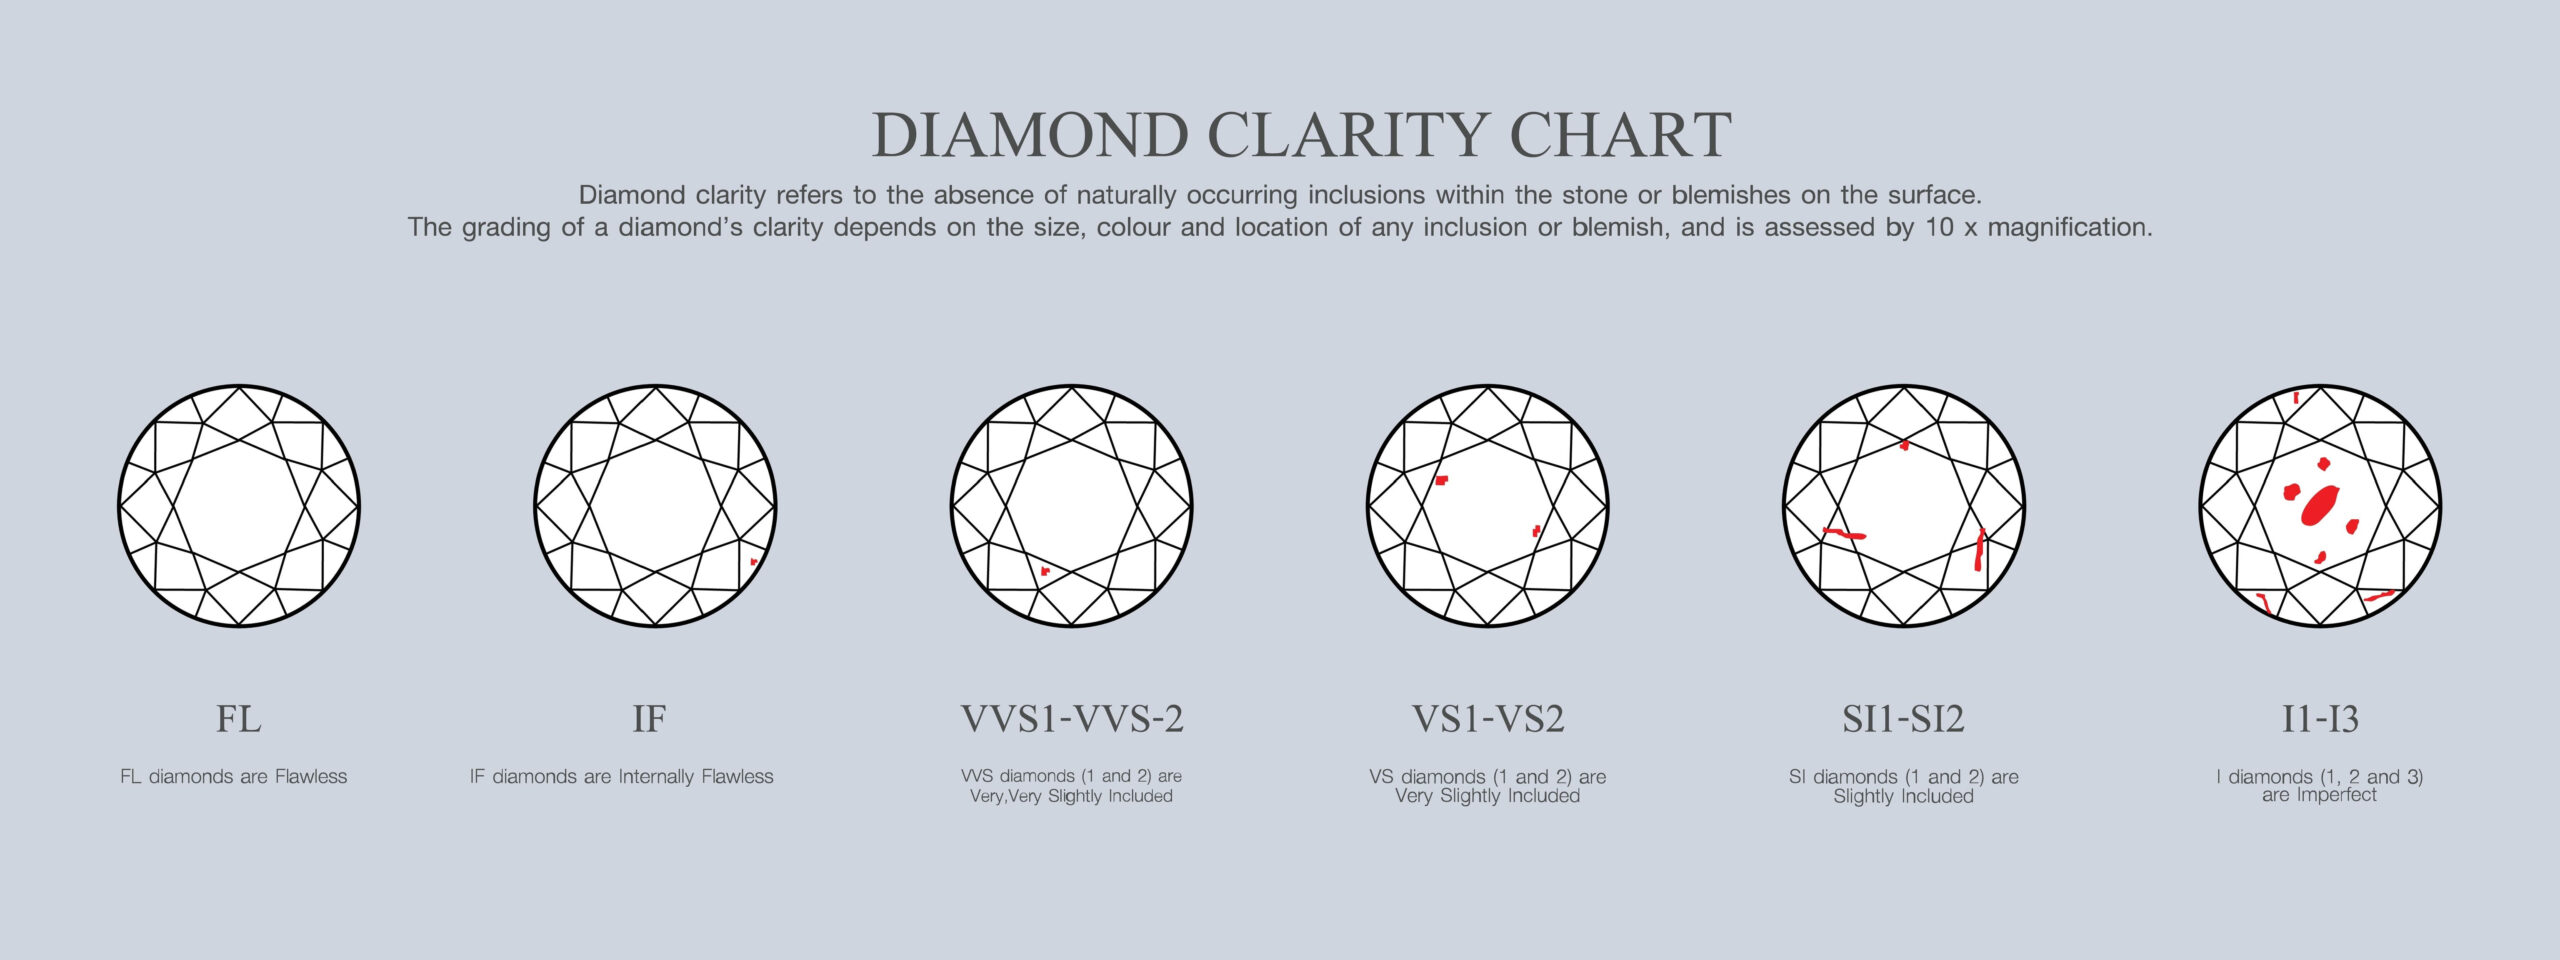 Diamond clarity chart for grading